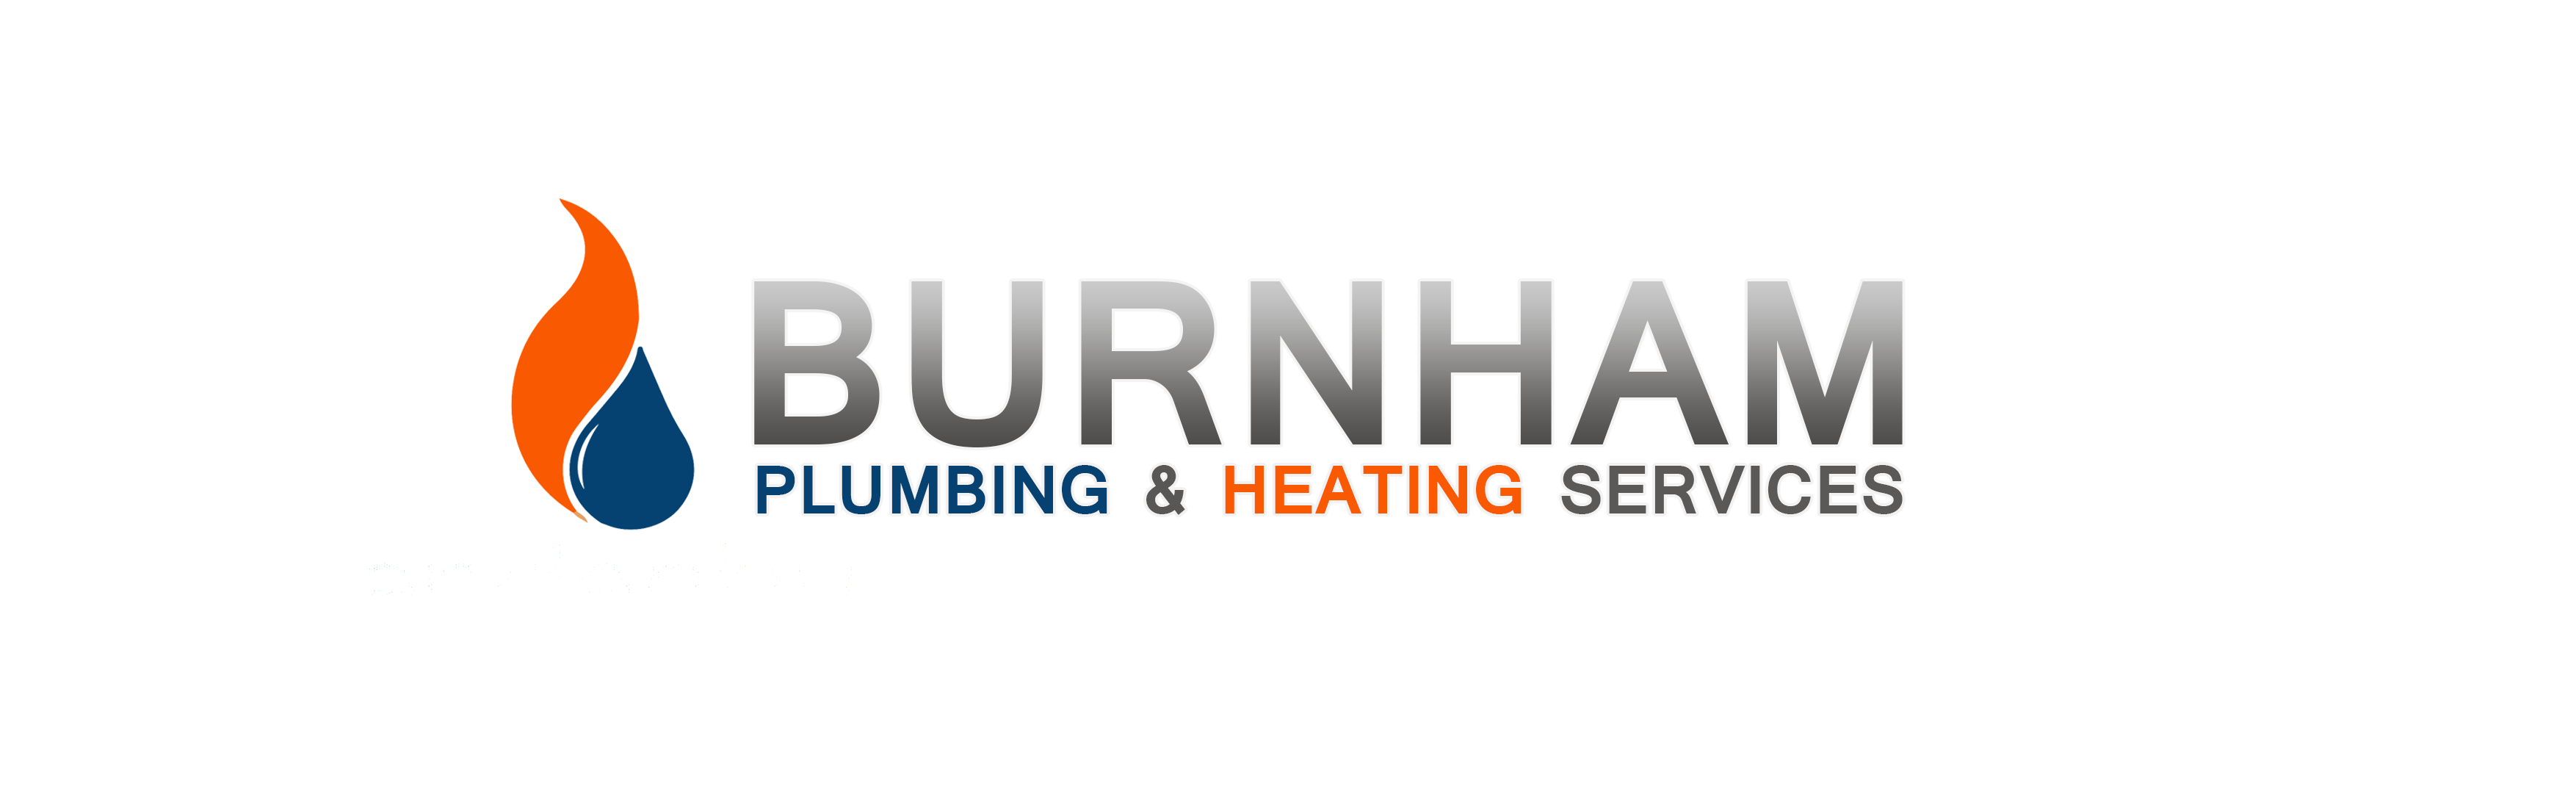 Burnham Boiler Logo - Burnham Plumbing & Heating Services | Boiler Installations, Central ...